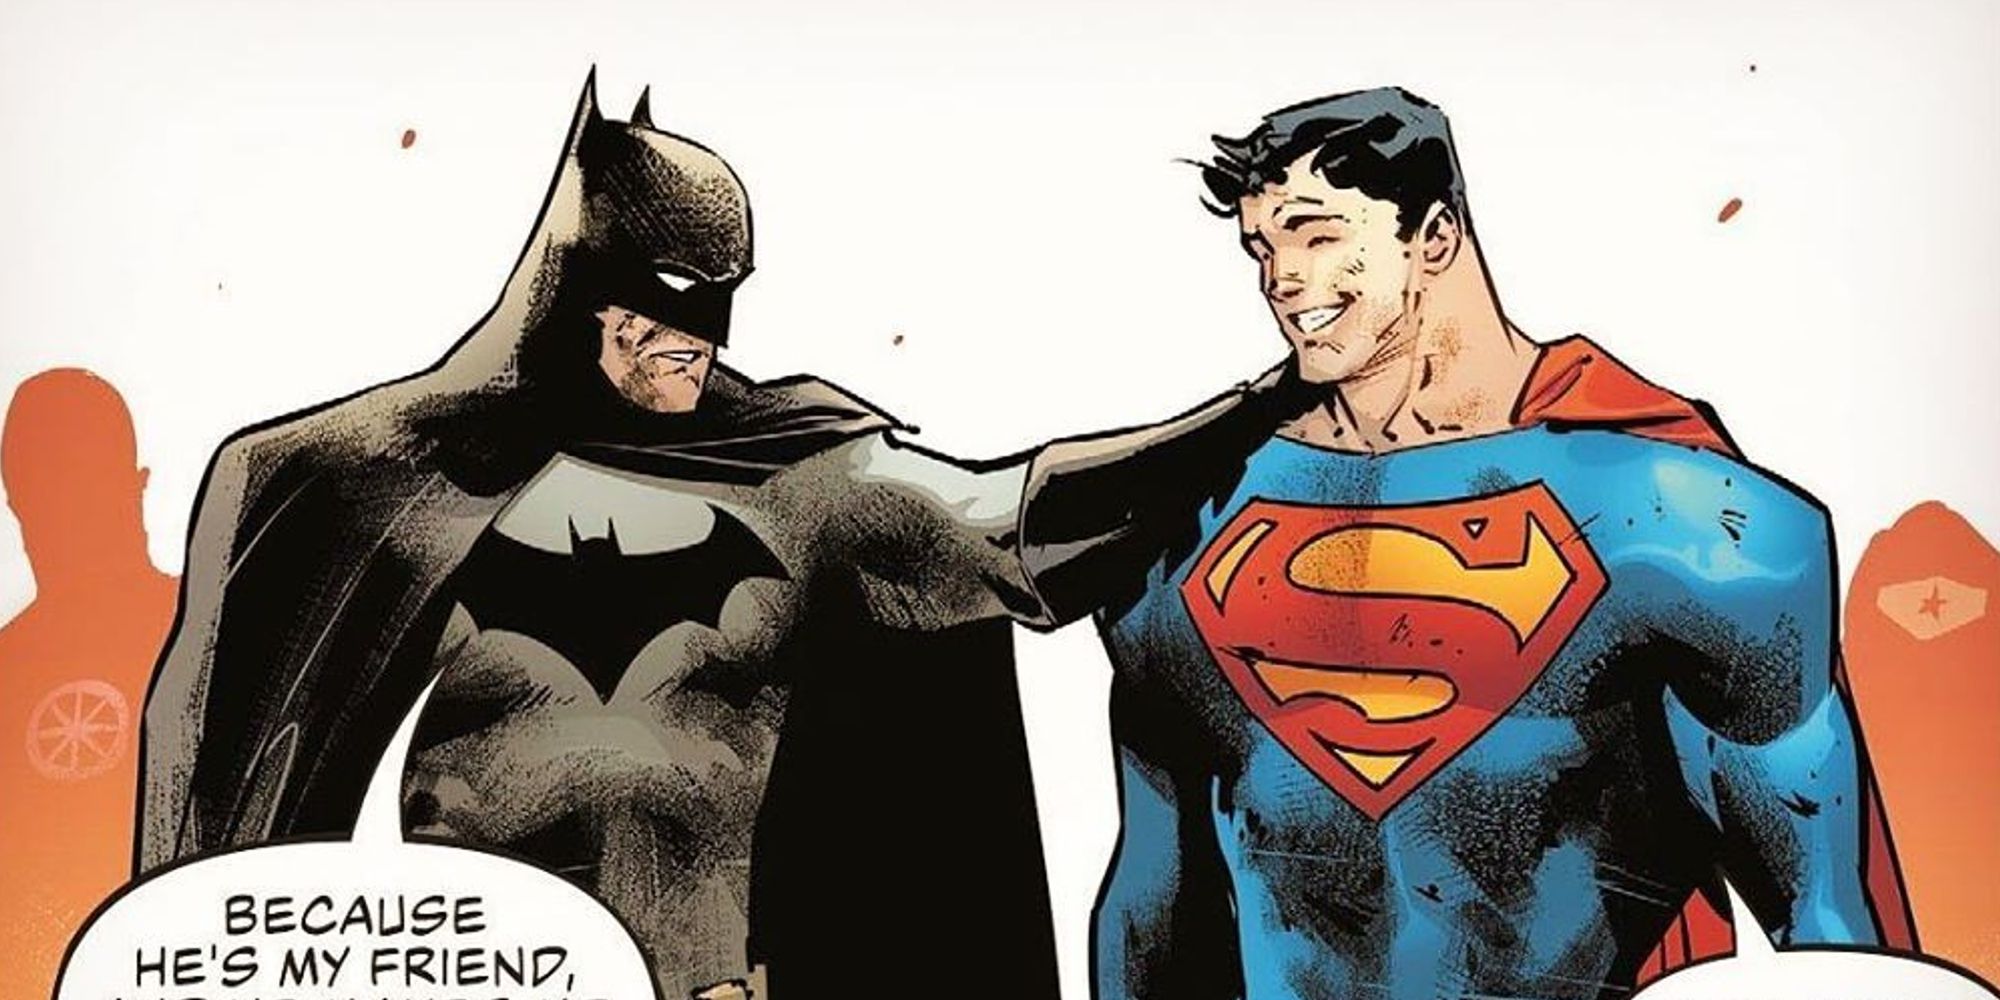 Batman admitting Superman is his friend in DC comics